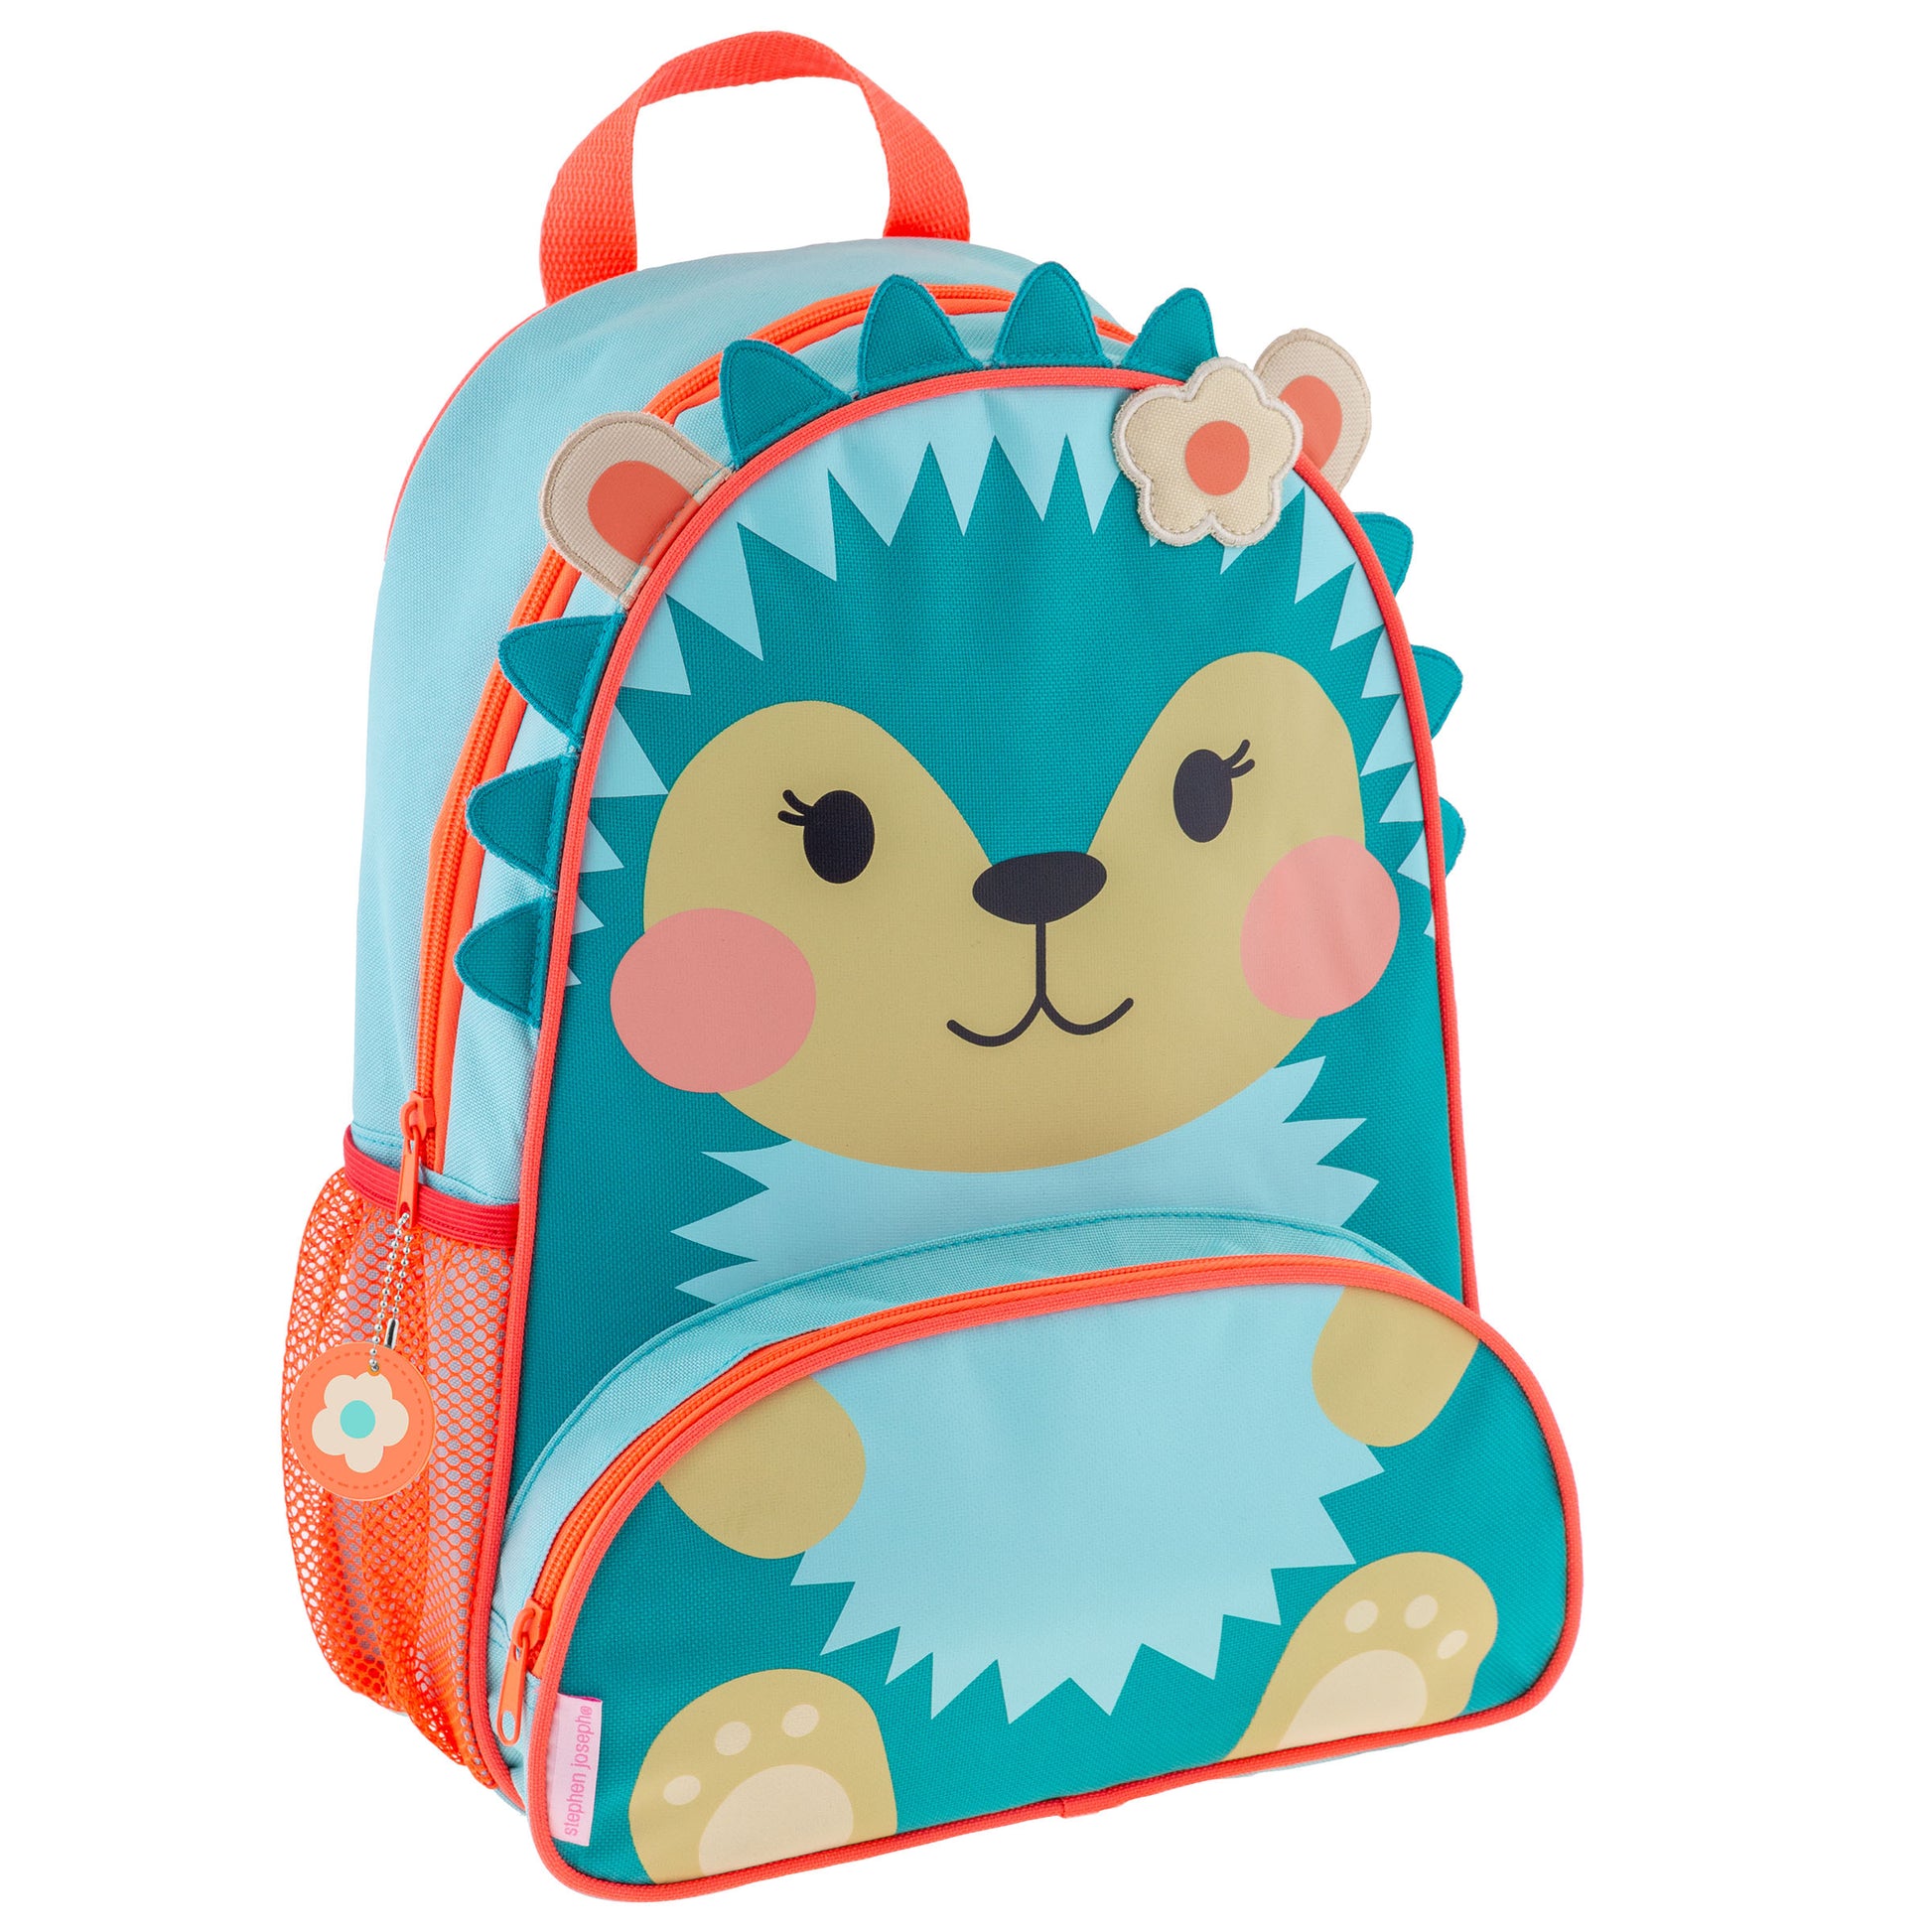 Hedgehog Sidekick Backpack with Personalization